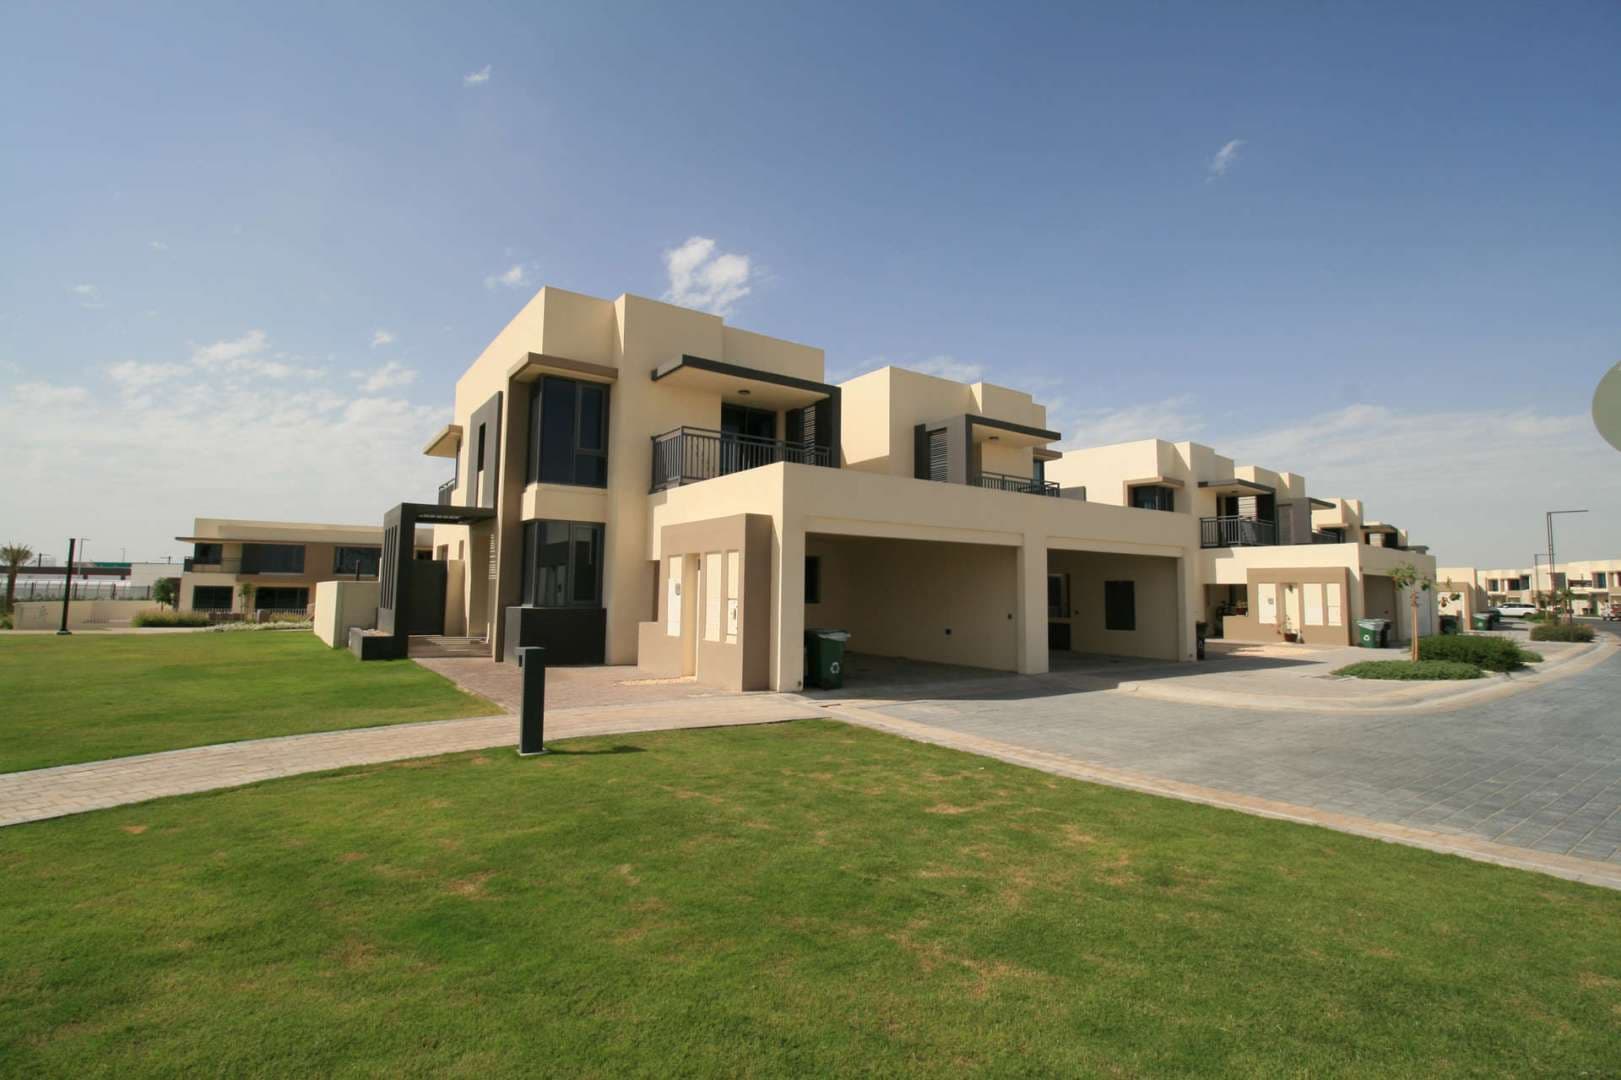 5 Bedroom Townhouse For Sale Maple At Dubai Hills Estate Lp07824 1f3f83a8beb4d400.jpg